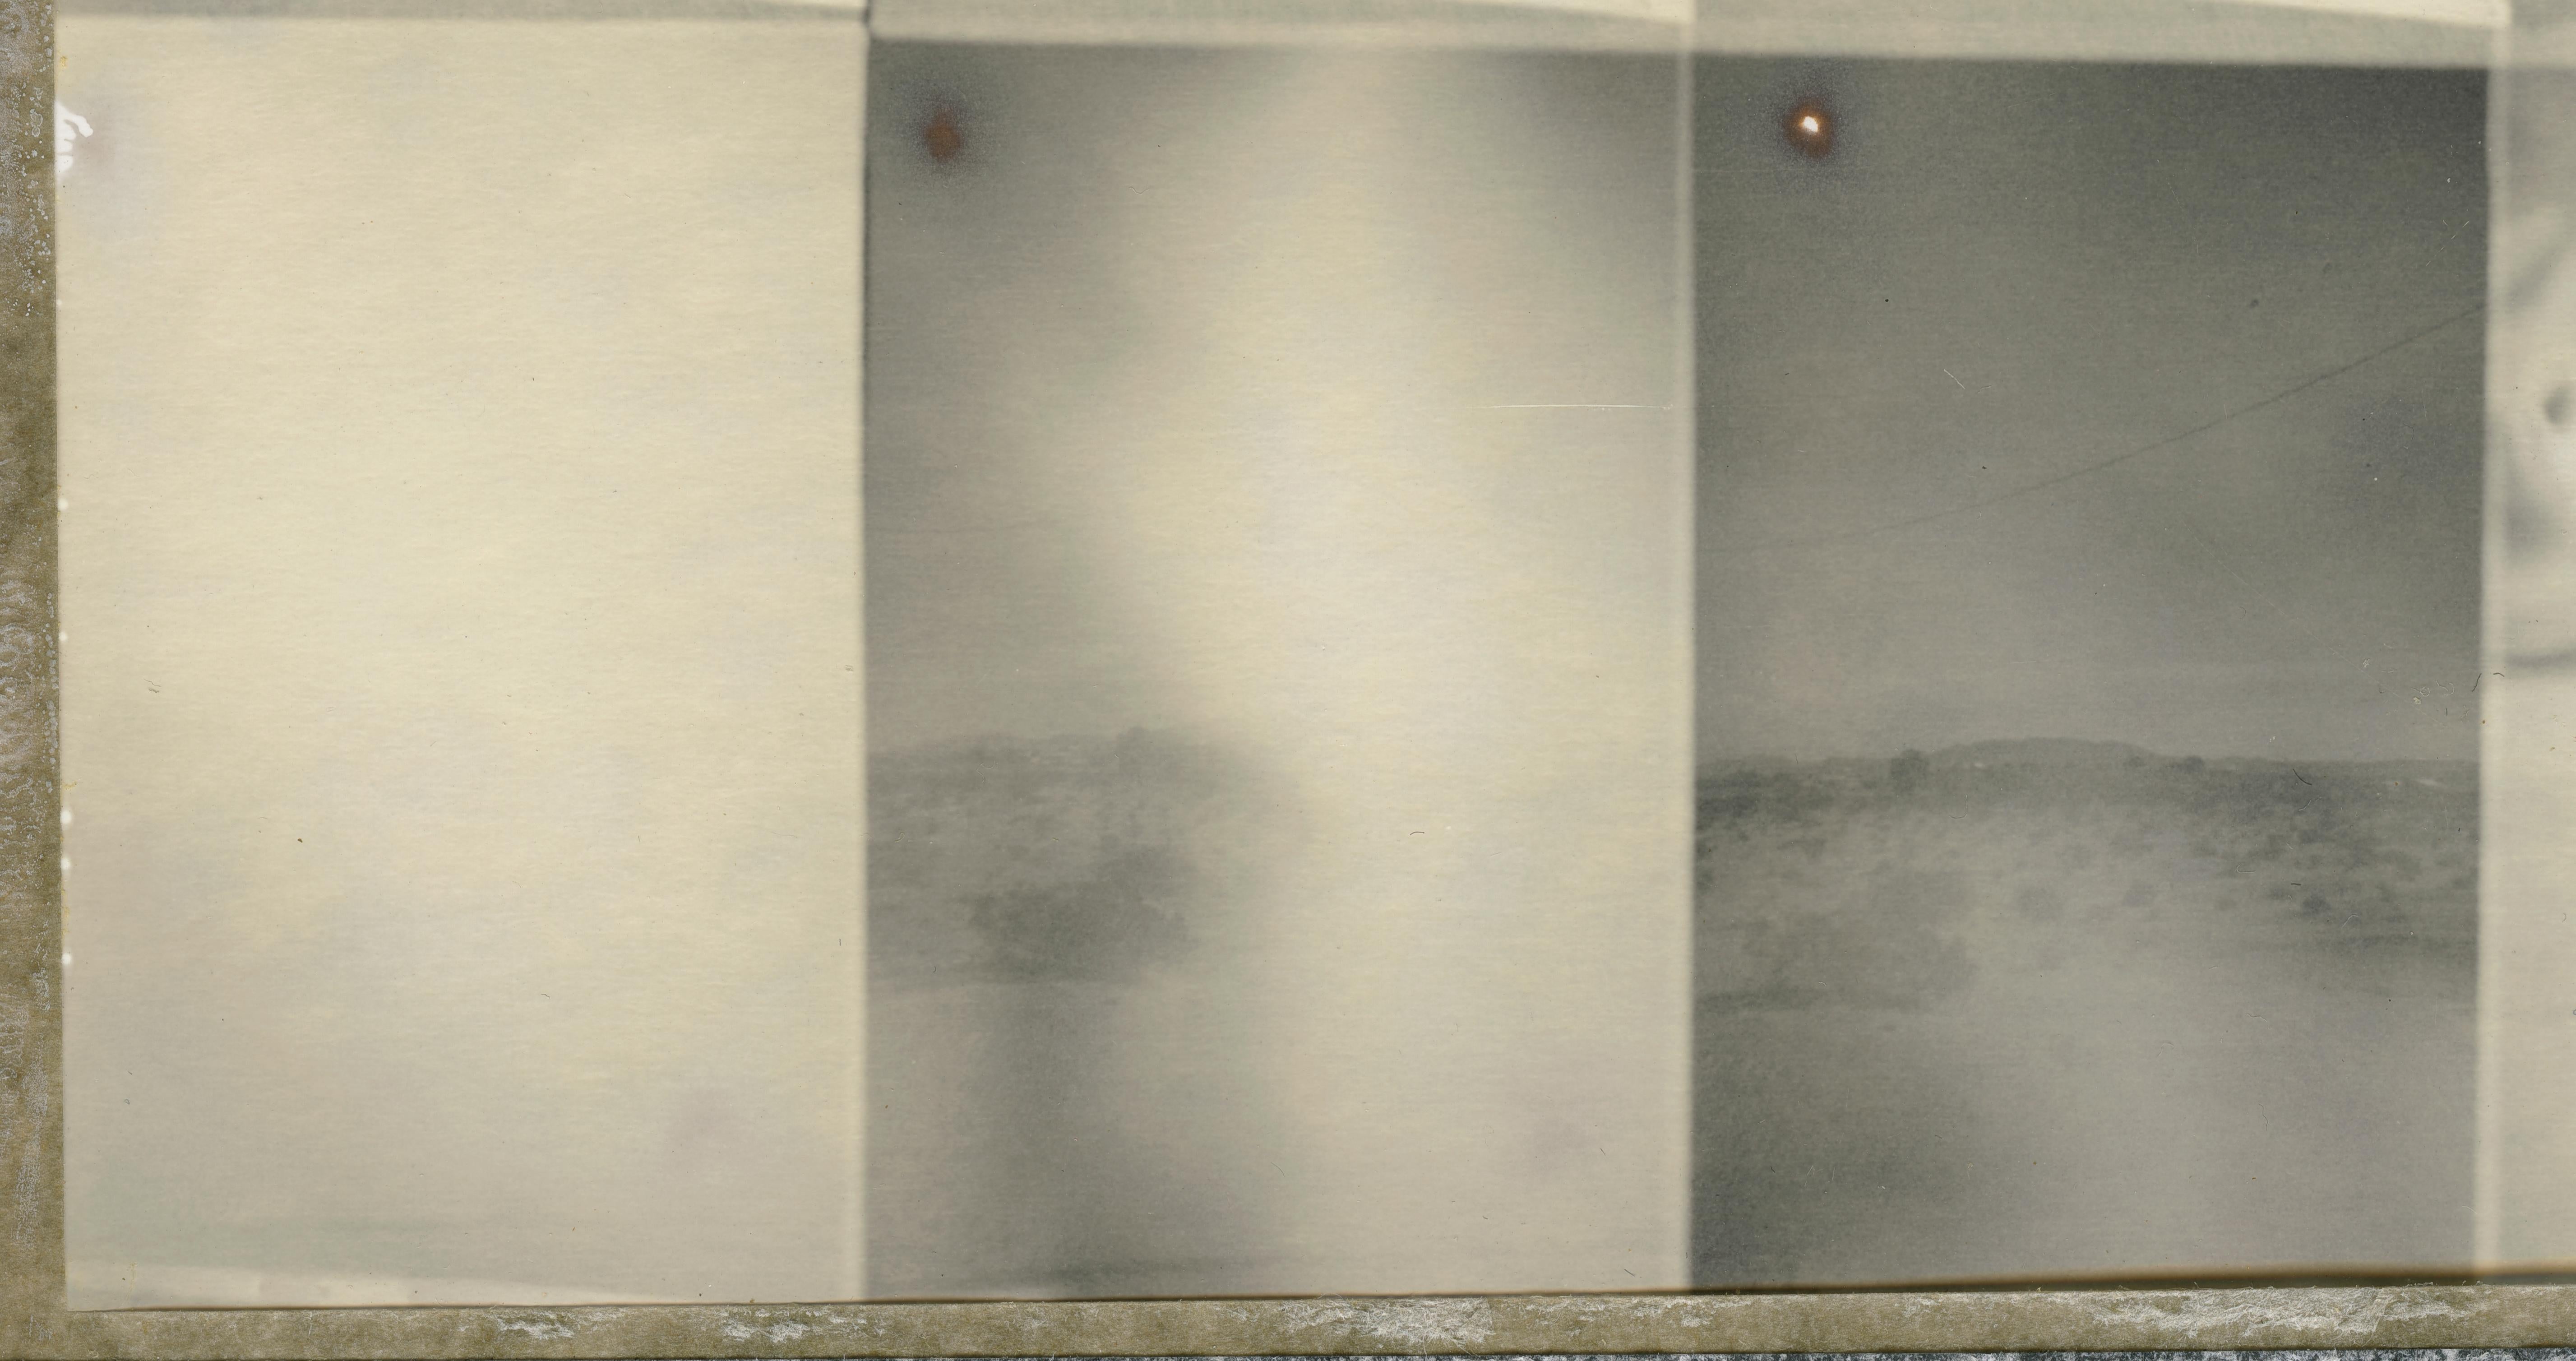 Stefanie Schneider Abstract Photograph – The Unconscious Mind (29 Palms, CA) - Polaroid, Contemporary, Wüste, Traum